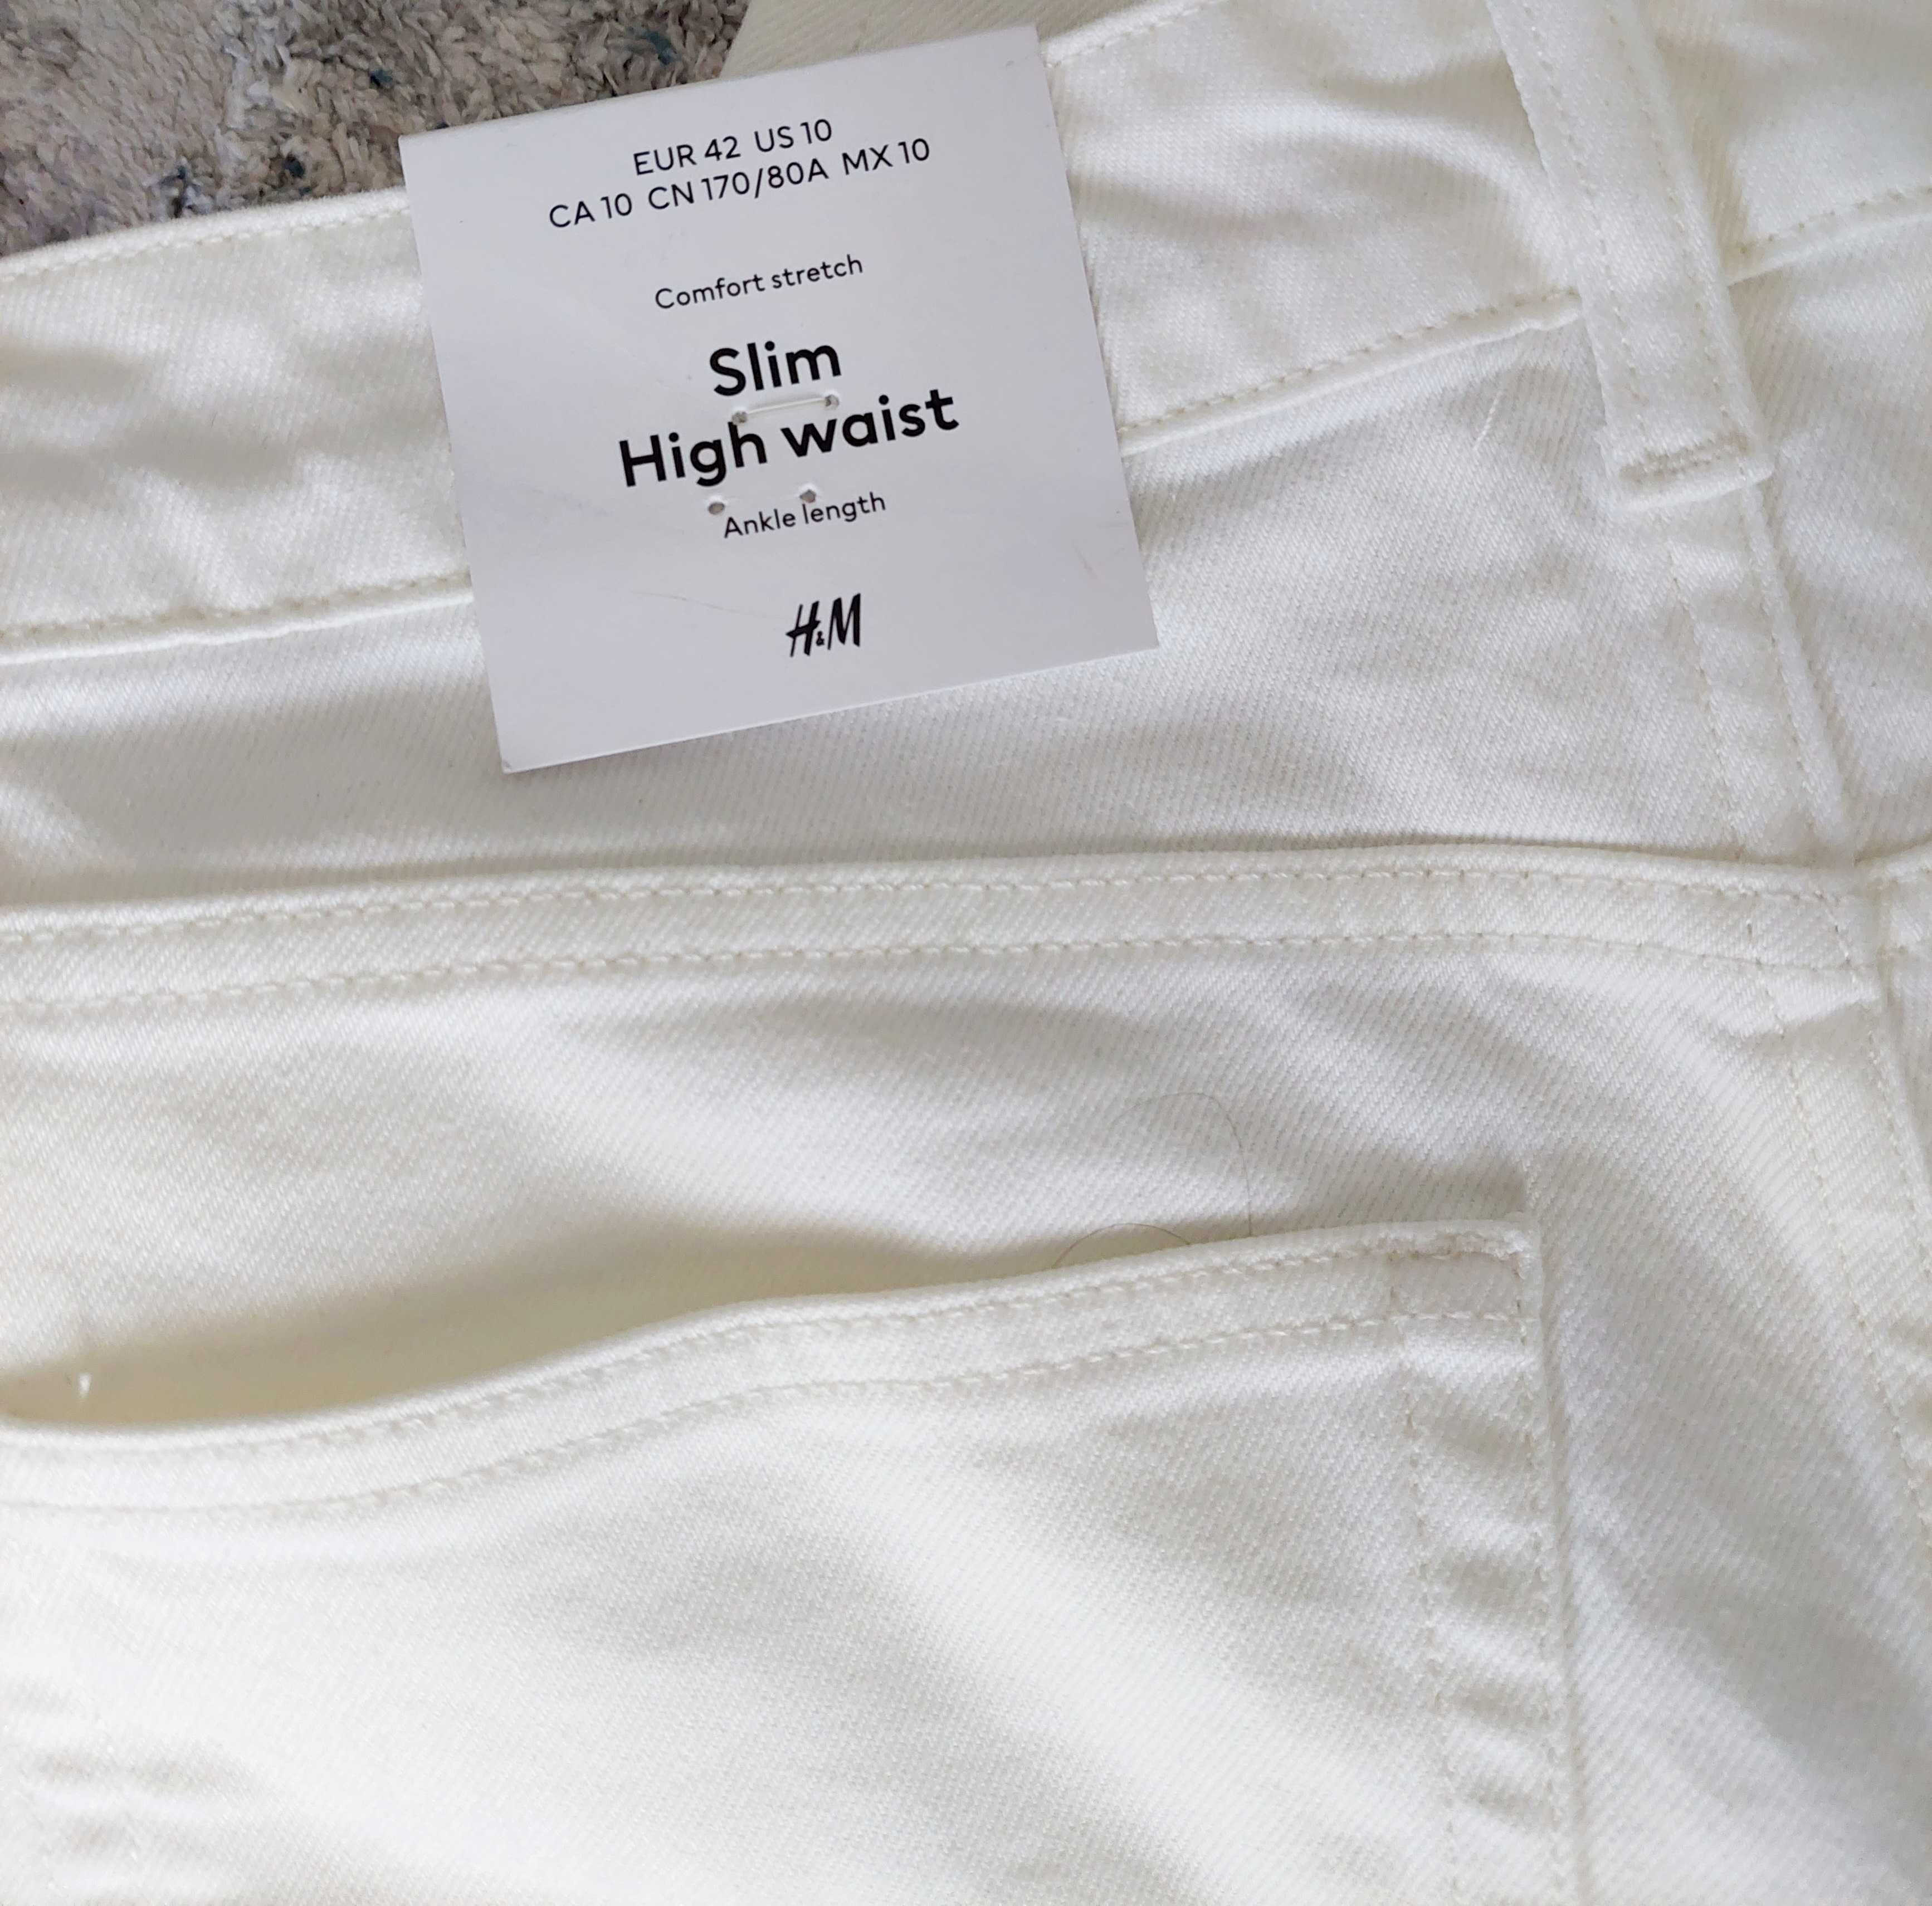 Blugi albi H&M noi cu eticheta marimea 42